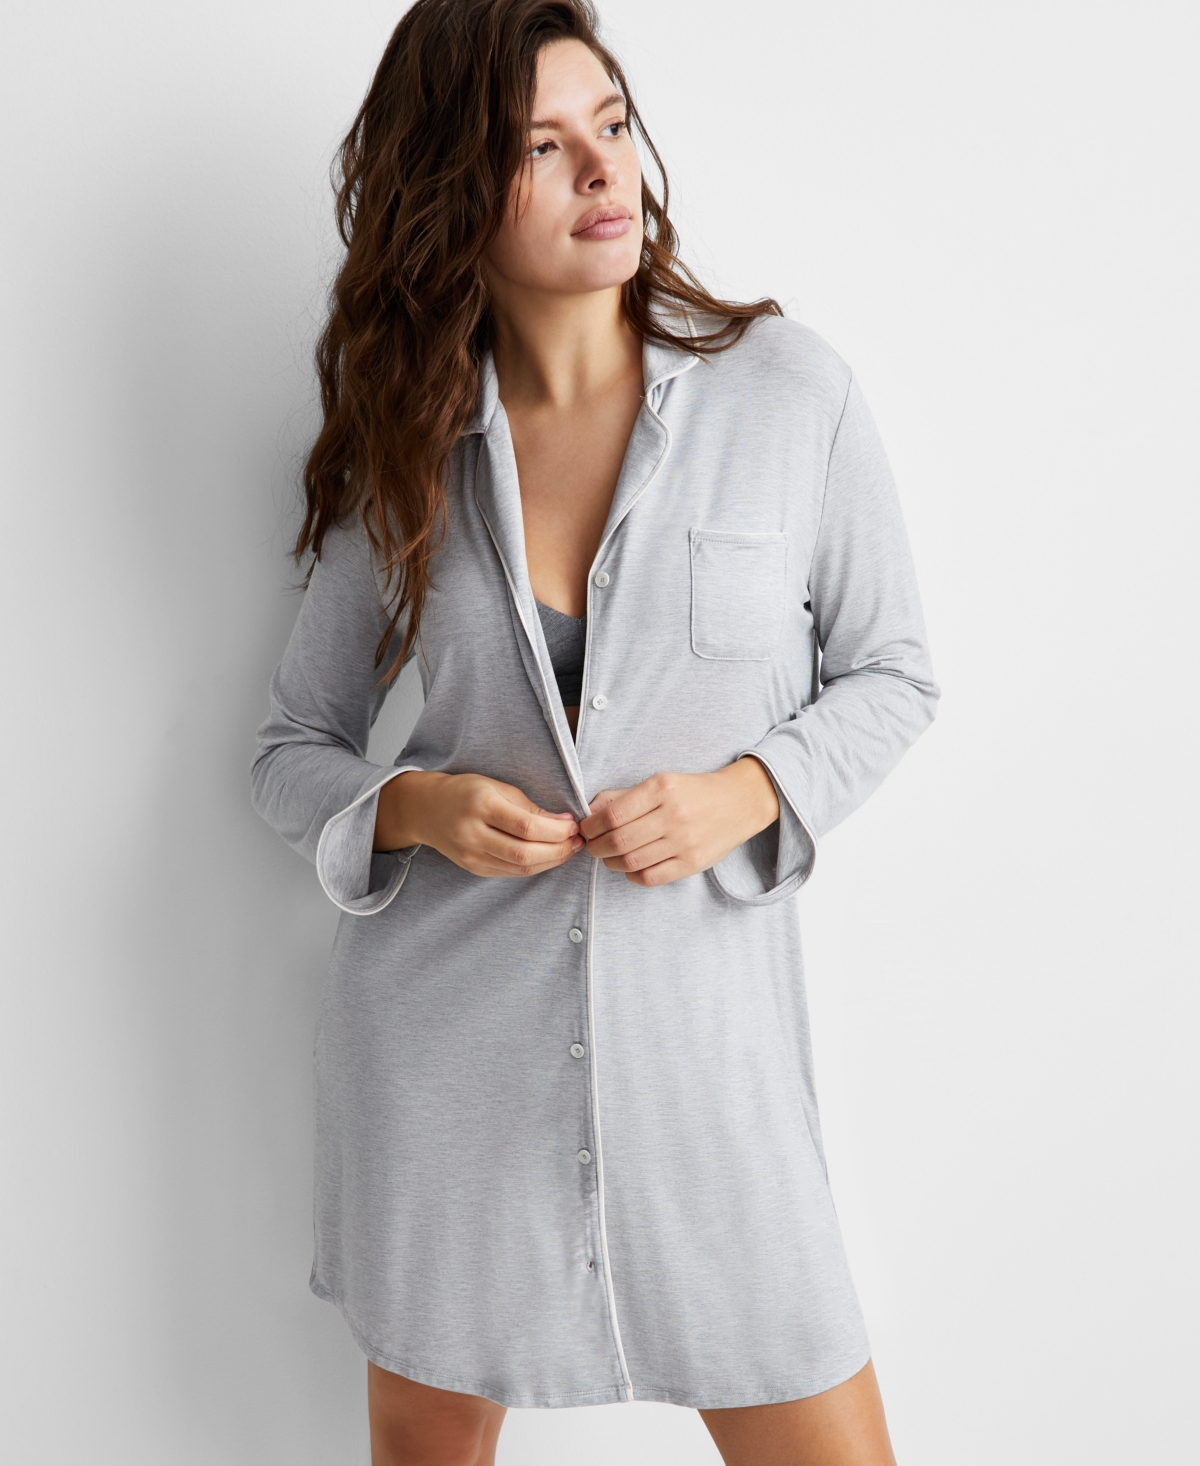 State Of Day Women's Notch Collar Sleepshirt Xs-3x, Created For Macy's In Sleep Grey Heather